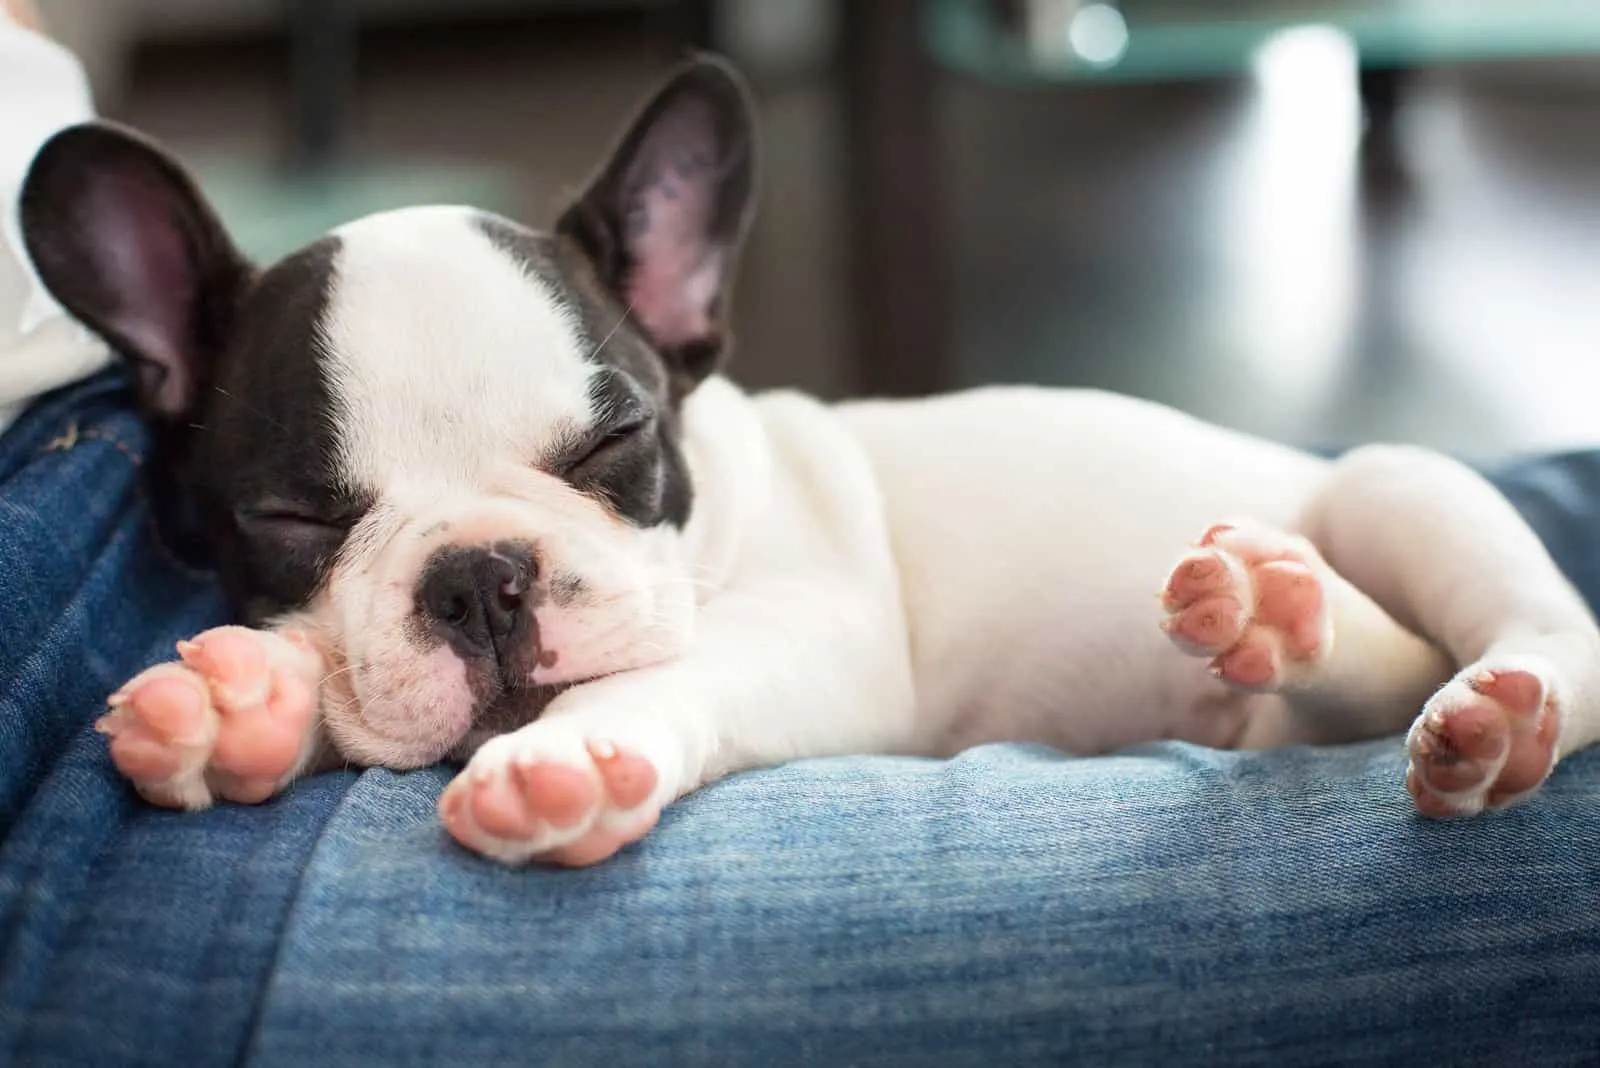 French Bulldog puppy sleeping